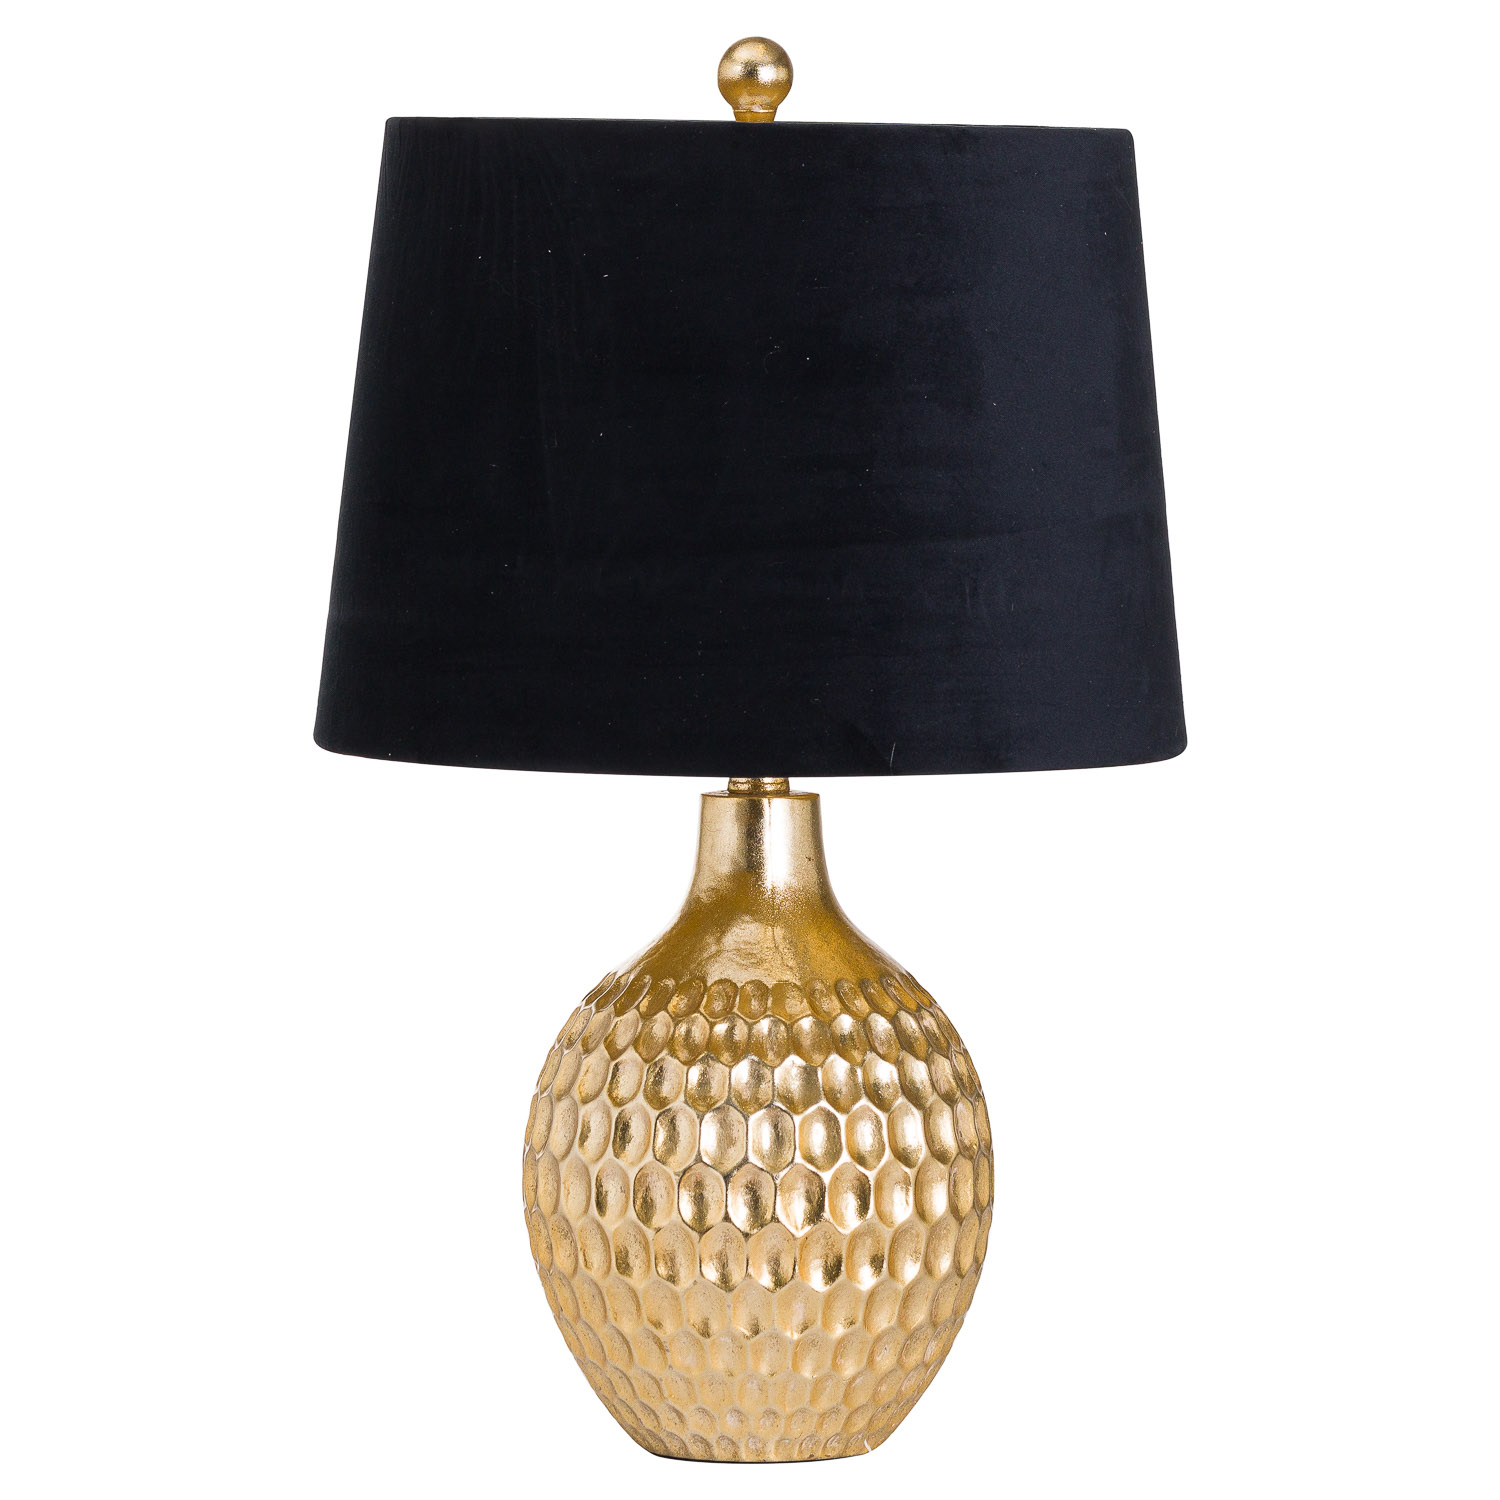 Vincent Gold Base Table Lamp With Black Velvet Shade - Image 1